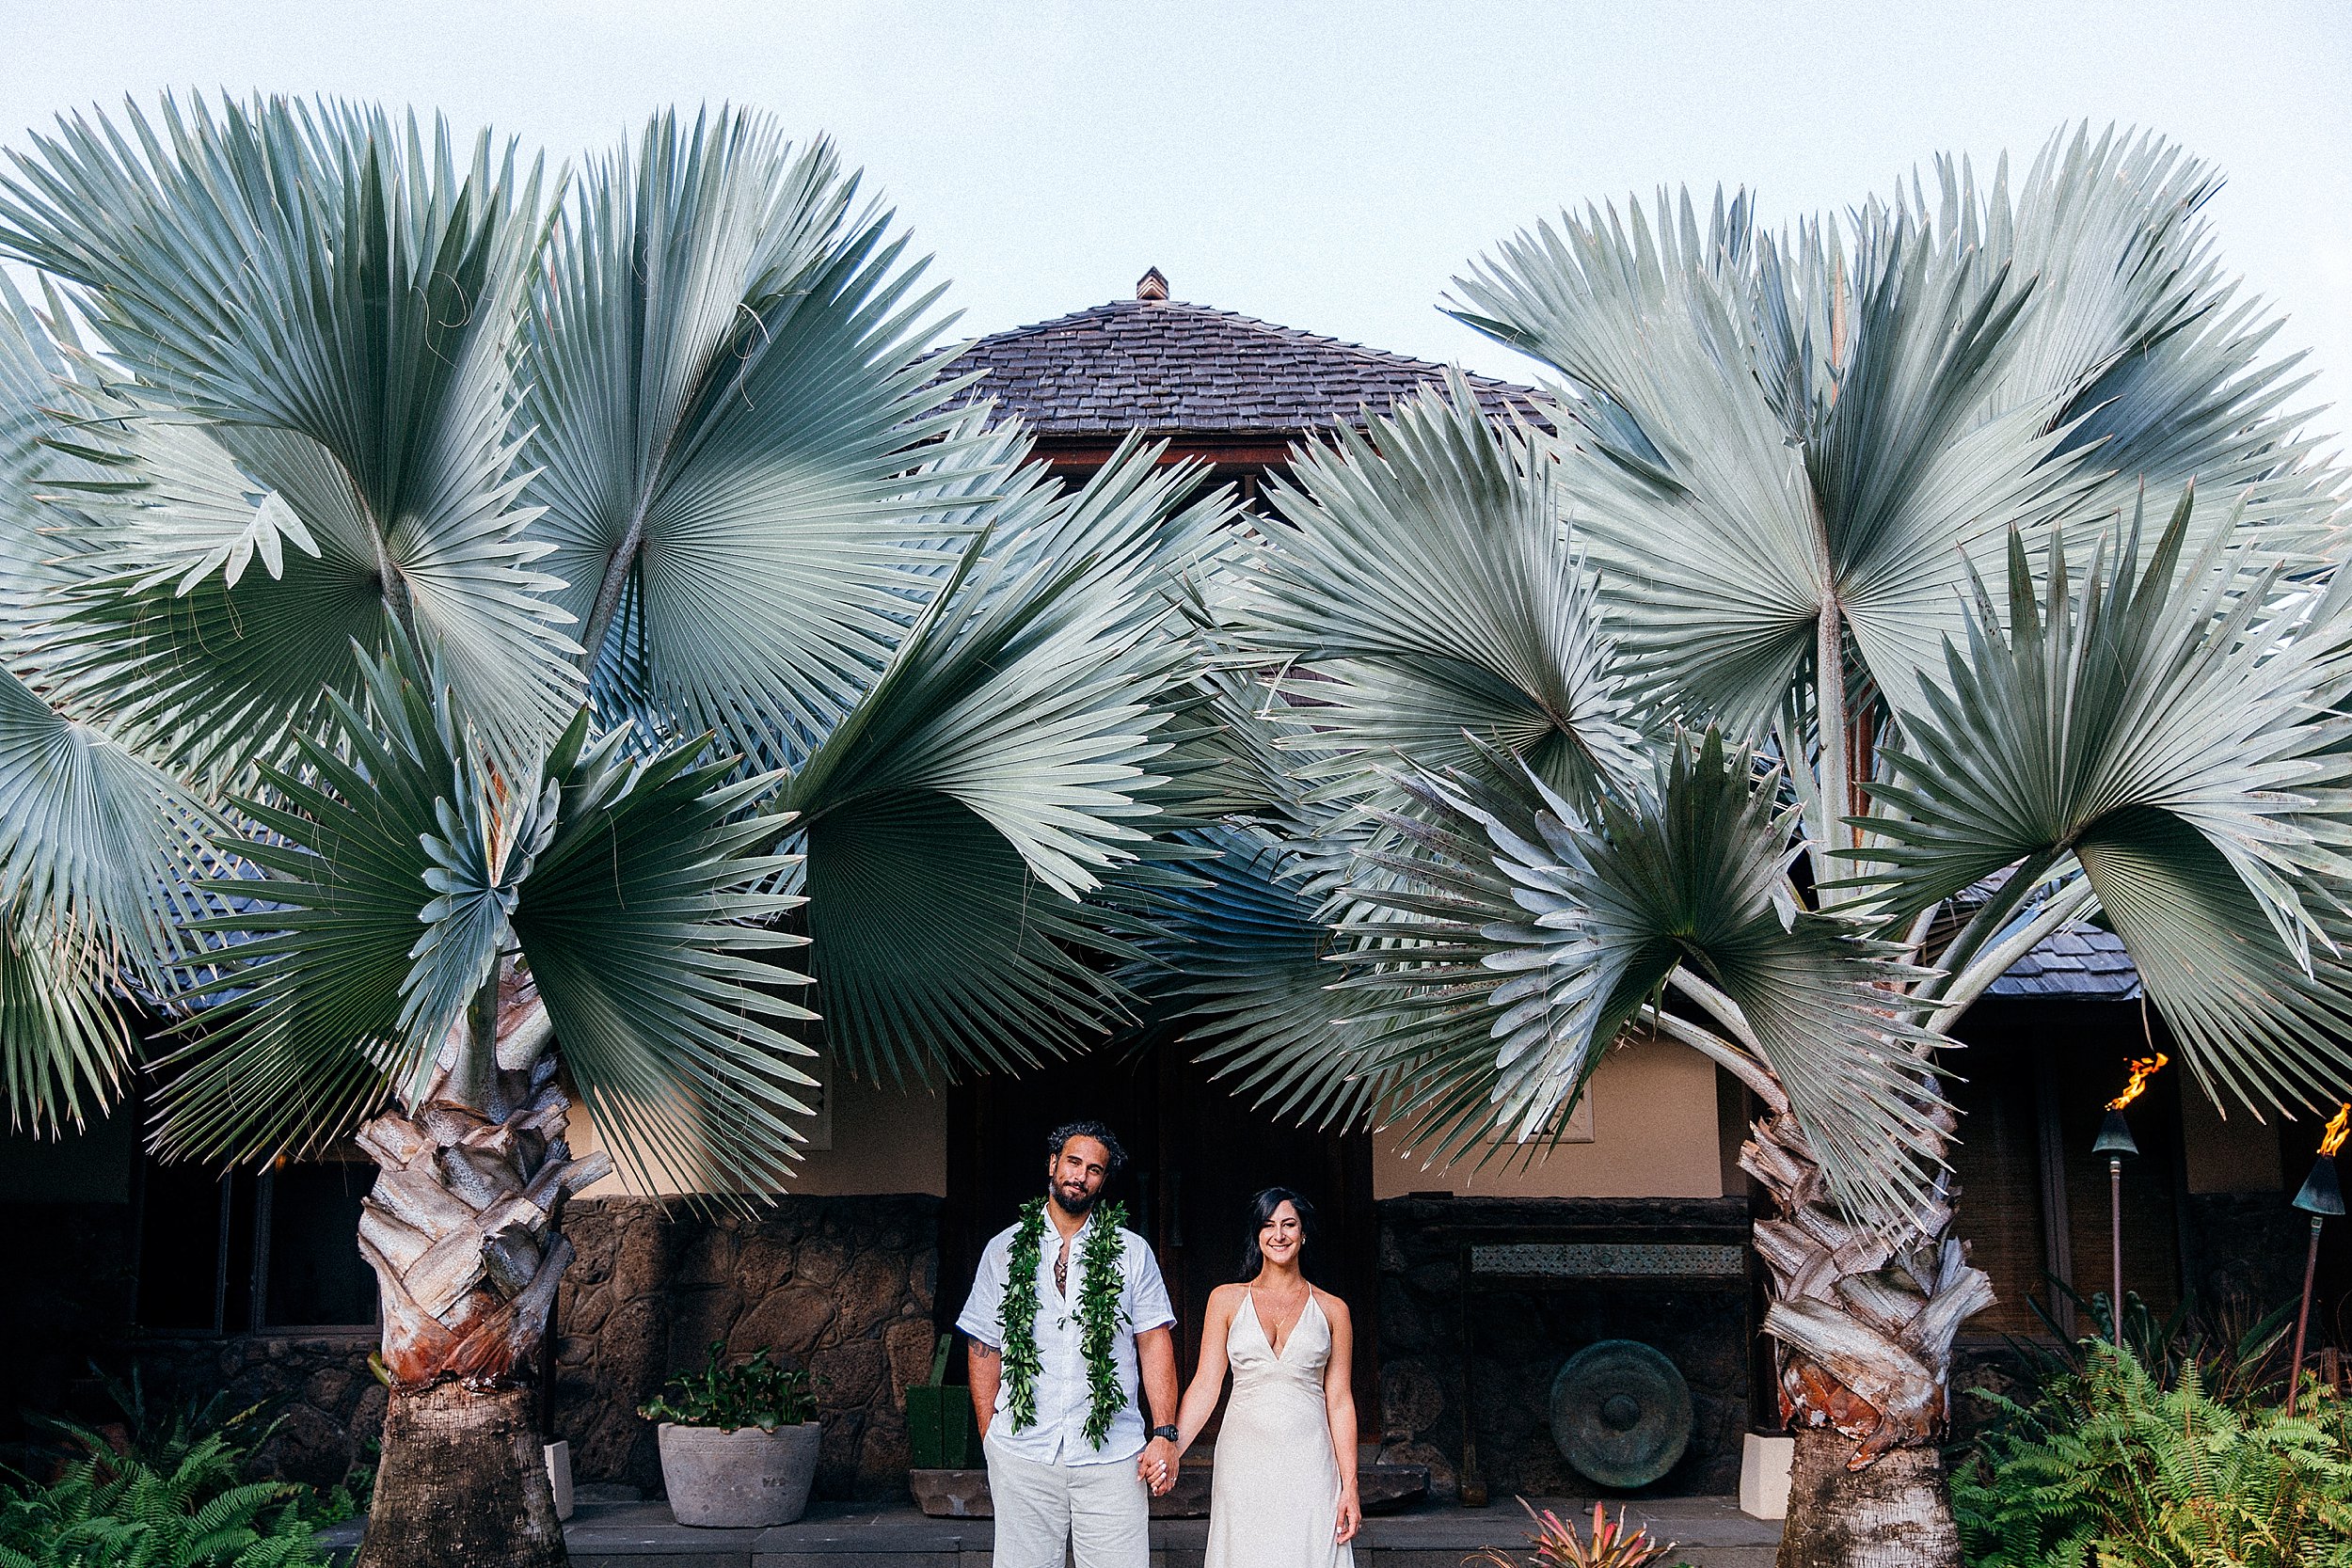  Victoria & Carlos - Joyous Backyard Oceanfront Wedding on North Shore Oahu 